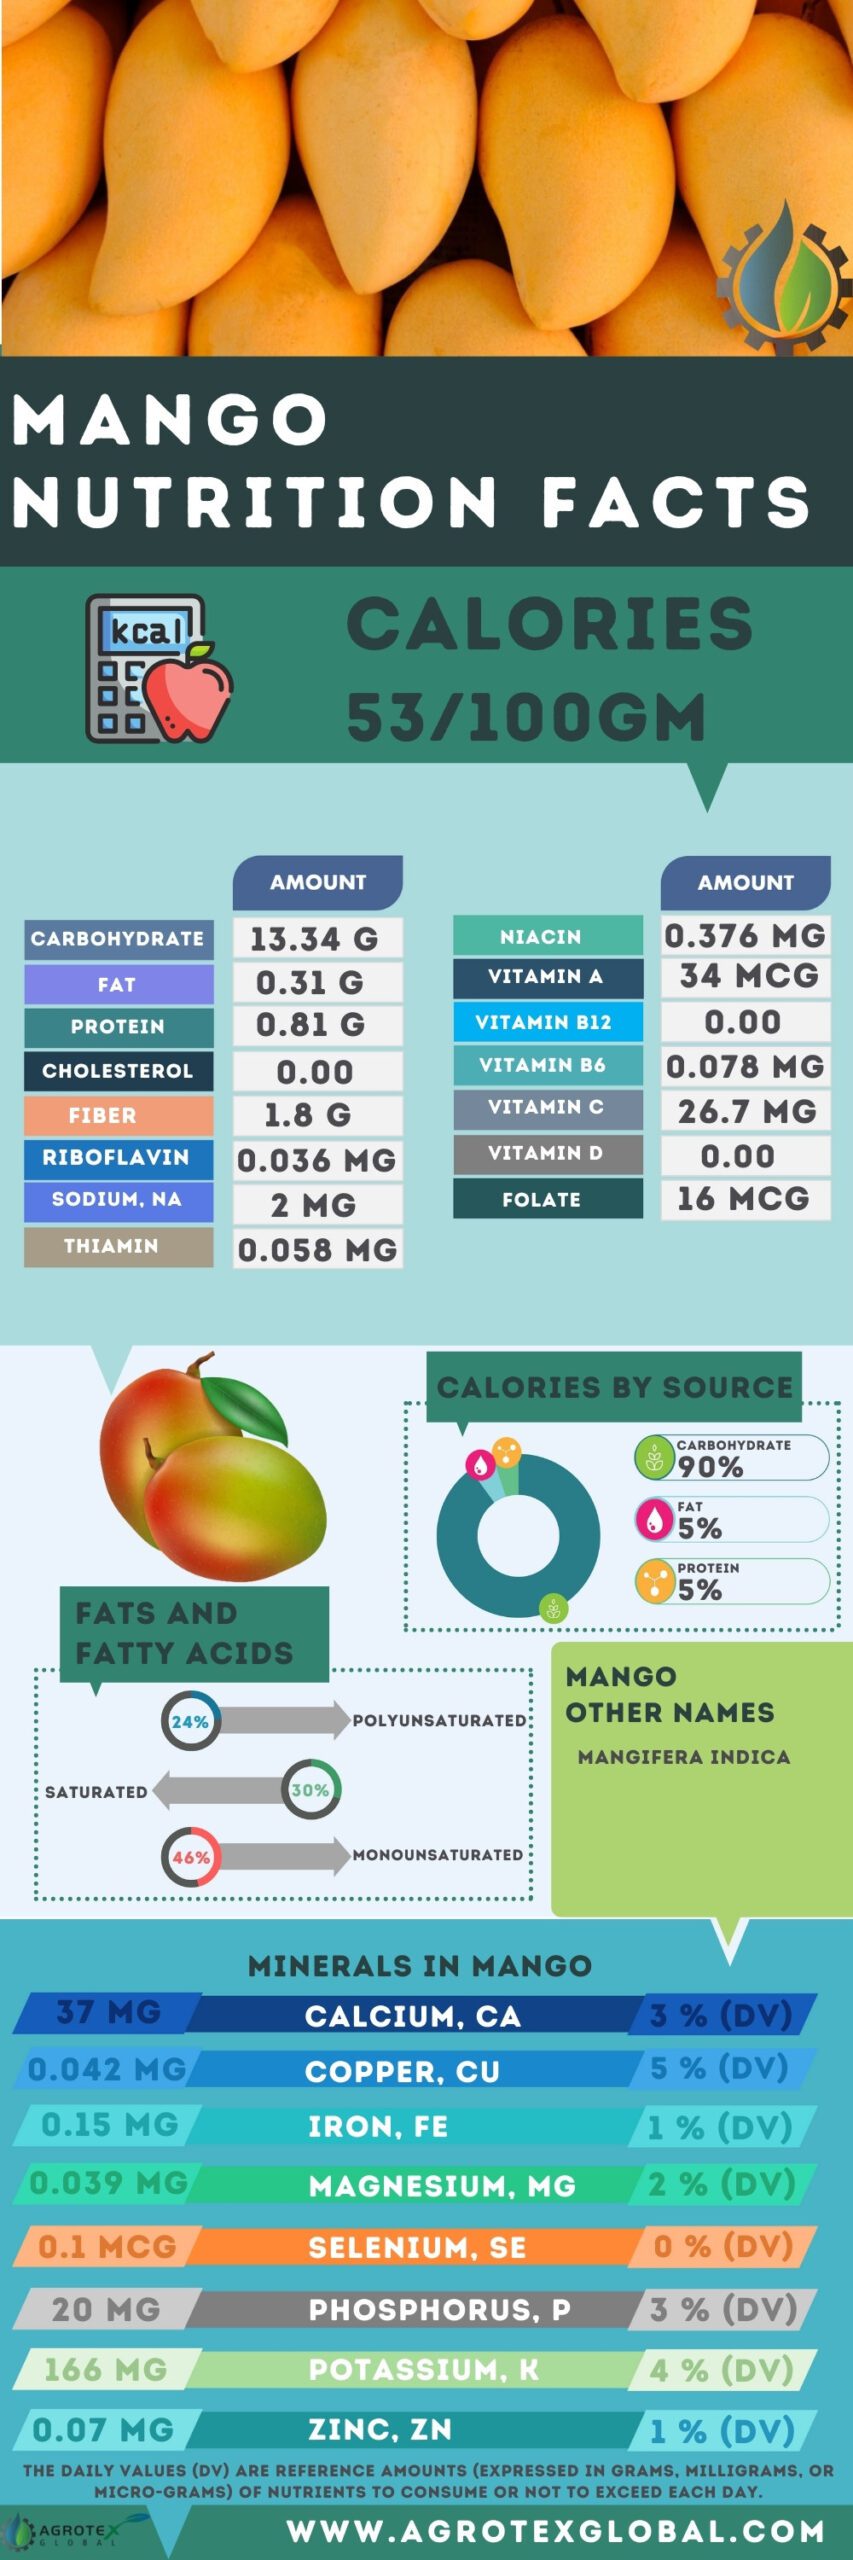 Mango NUTRITION FACTS calorie chart infographic